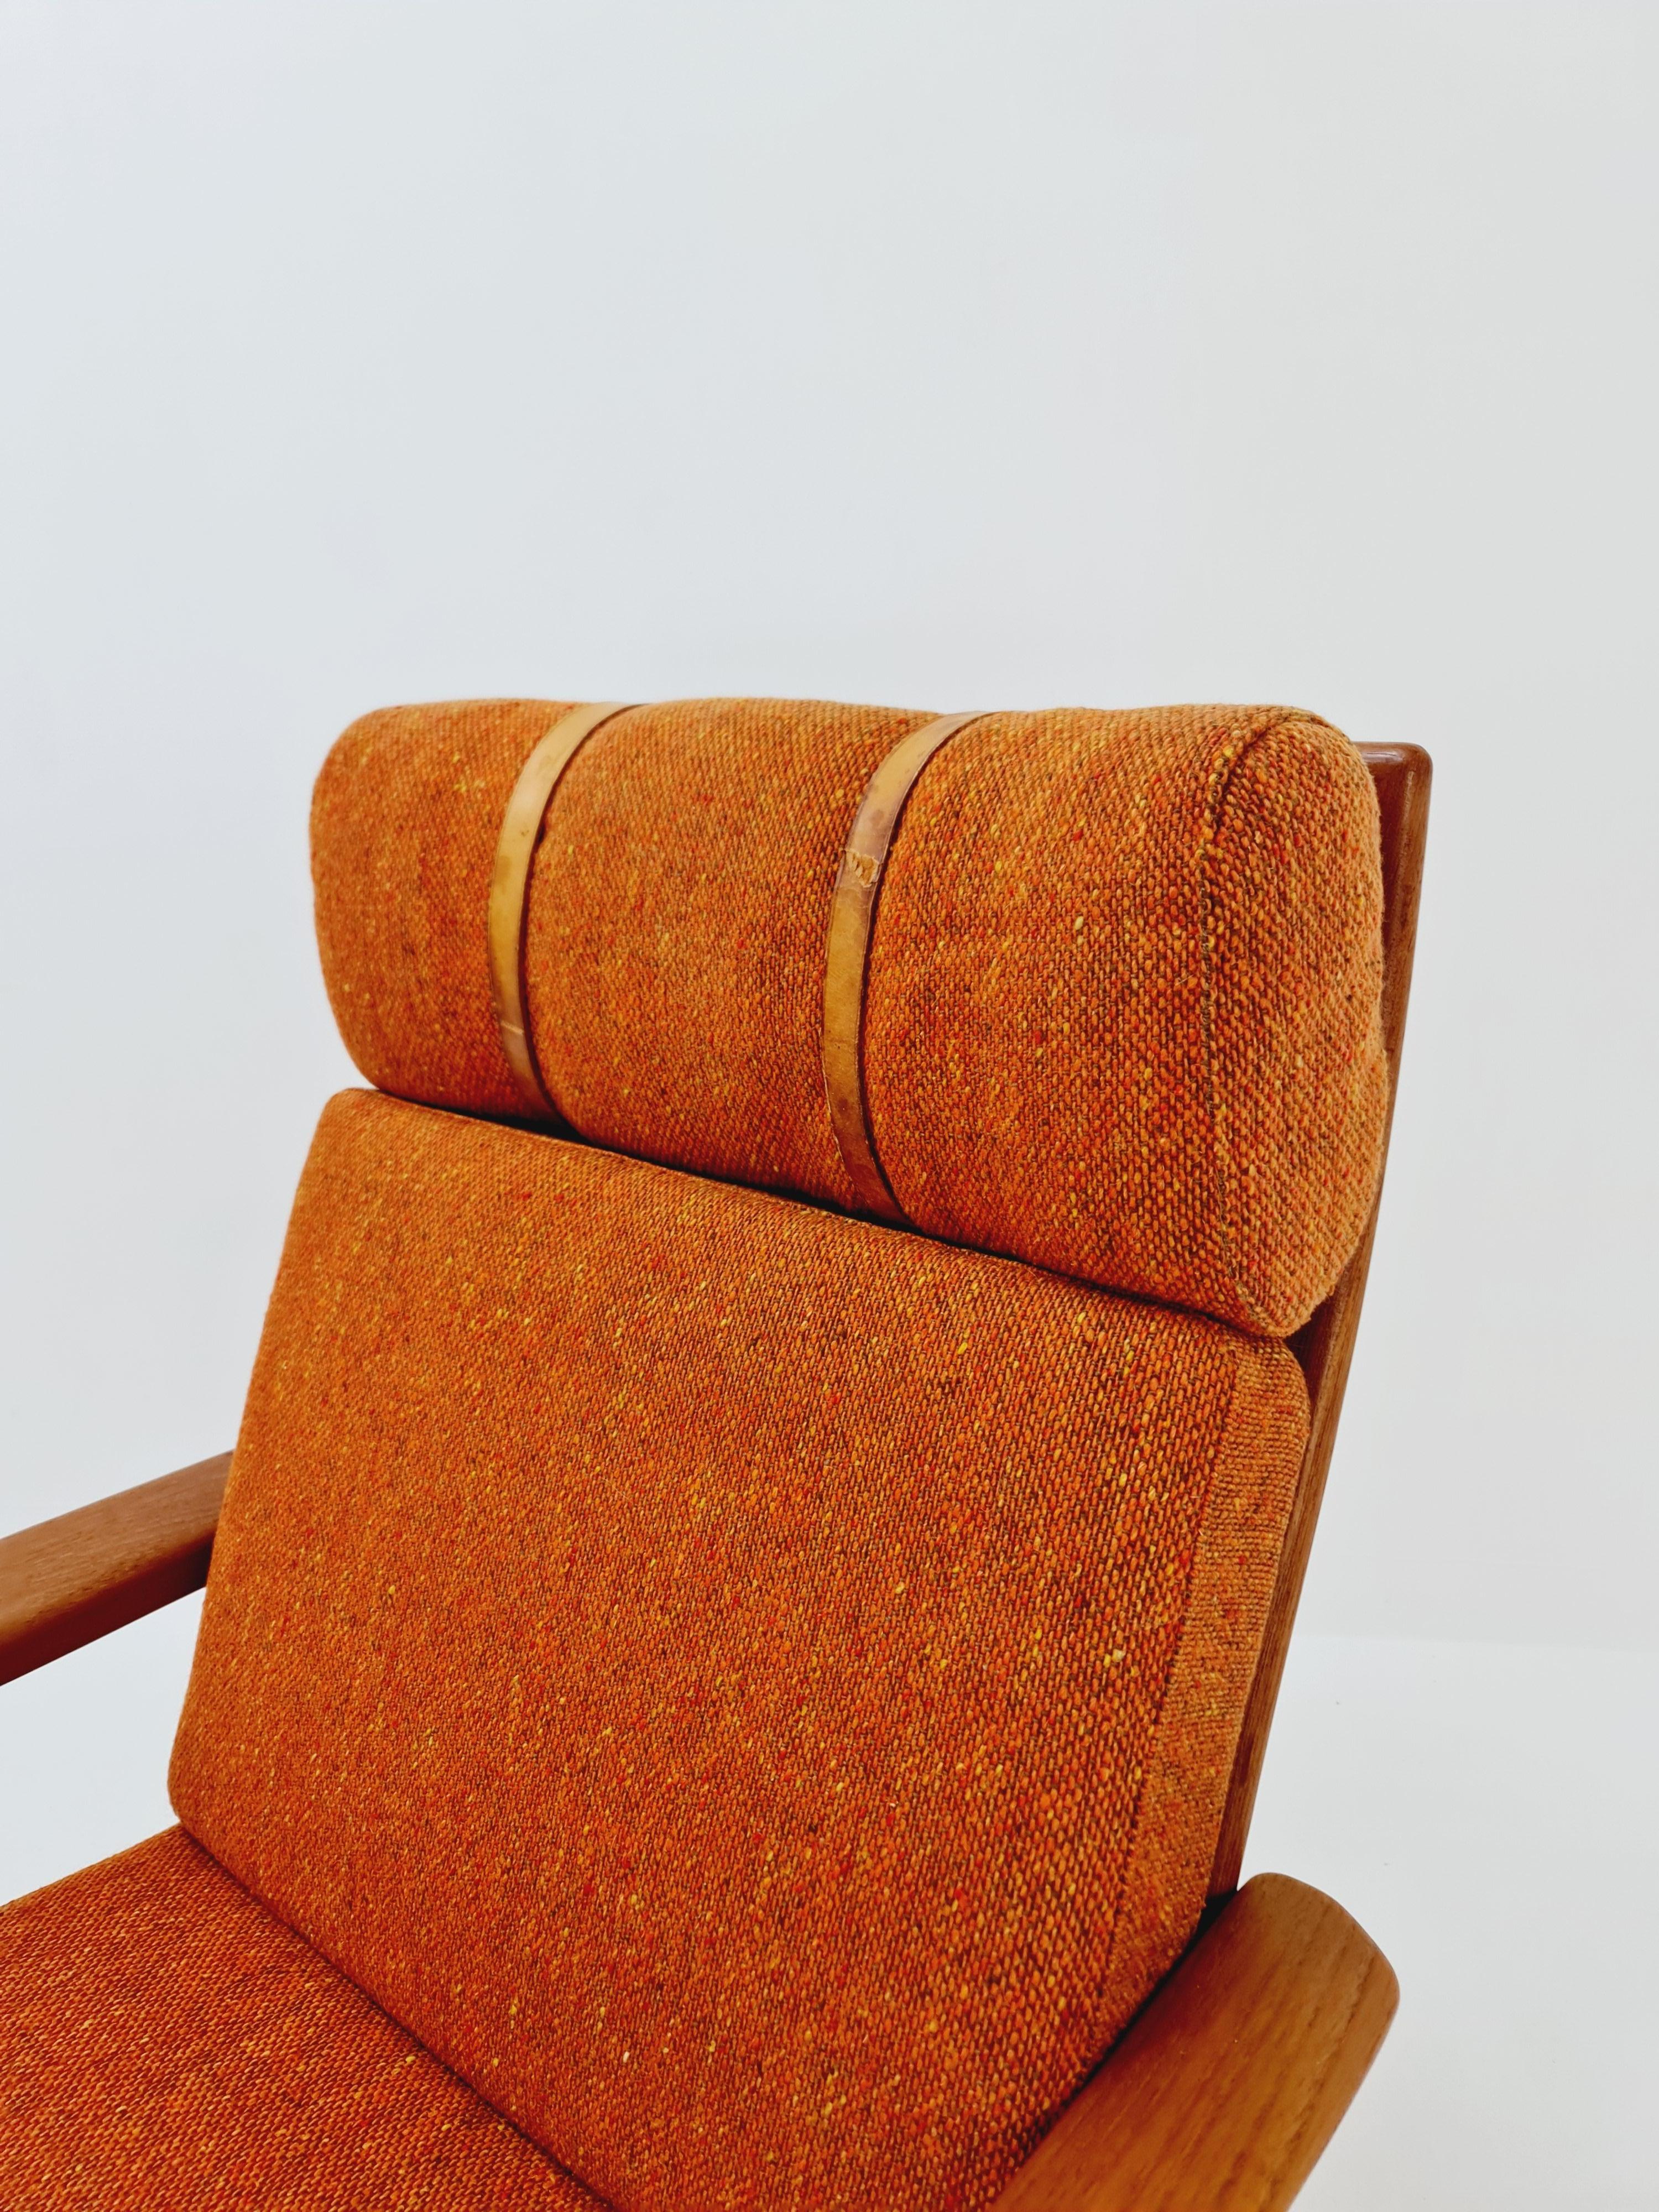 Mid century teak easy lounge high back chairs by Sven Ellekaer for Komfort  For Sale 1